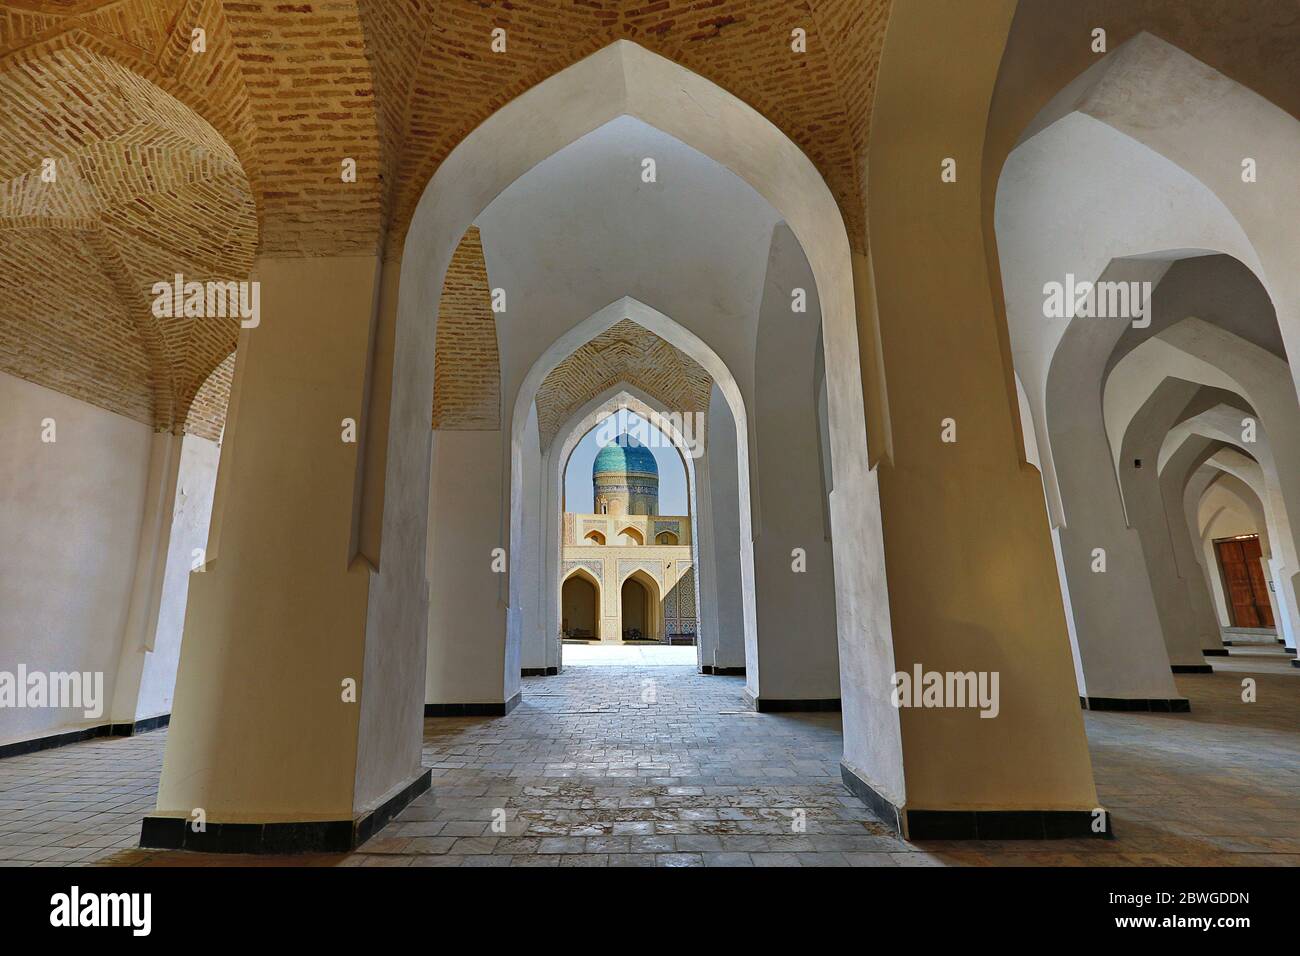 Arches of Poi Kalon mosque and its blue dome through archways, in Bukhara, Uzbekistan Stock Photo